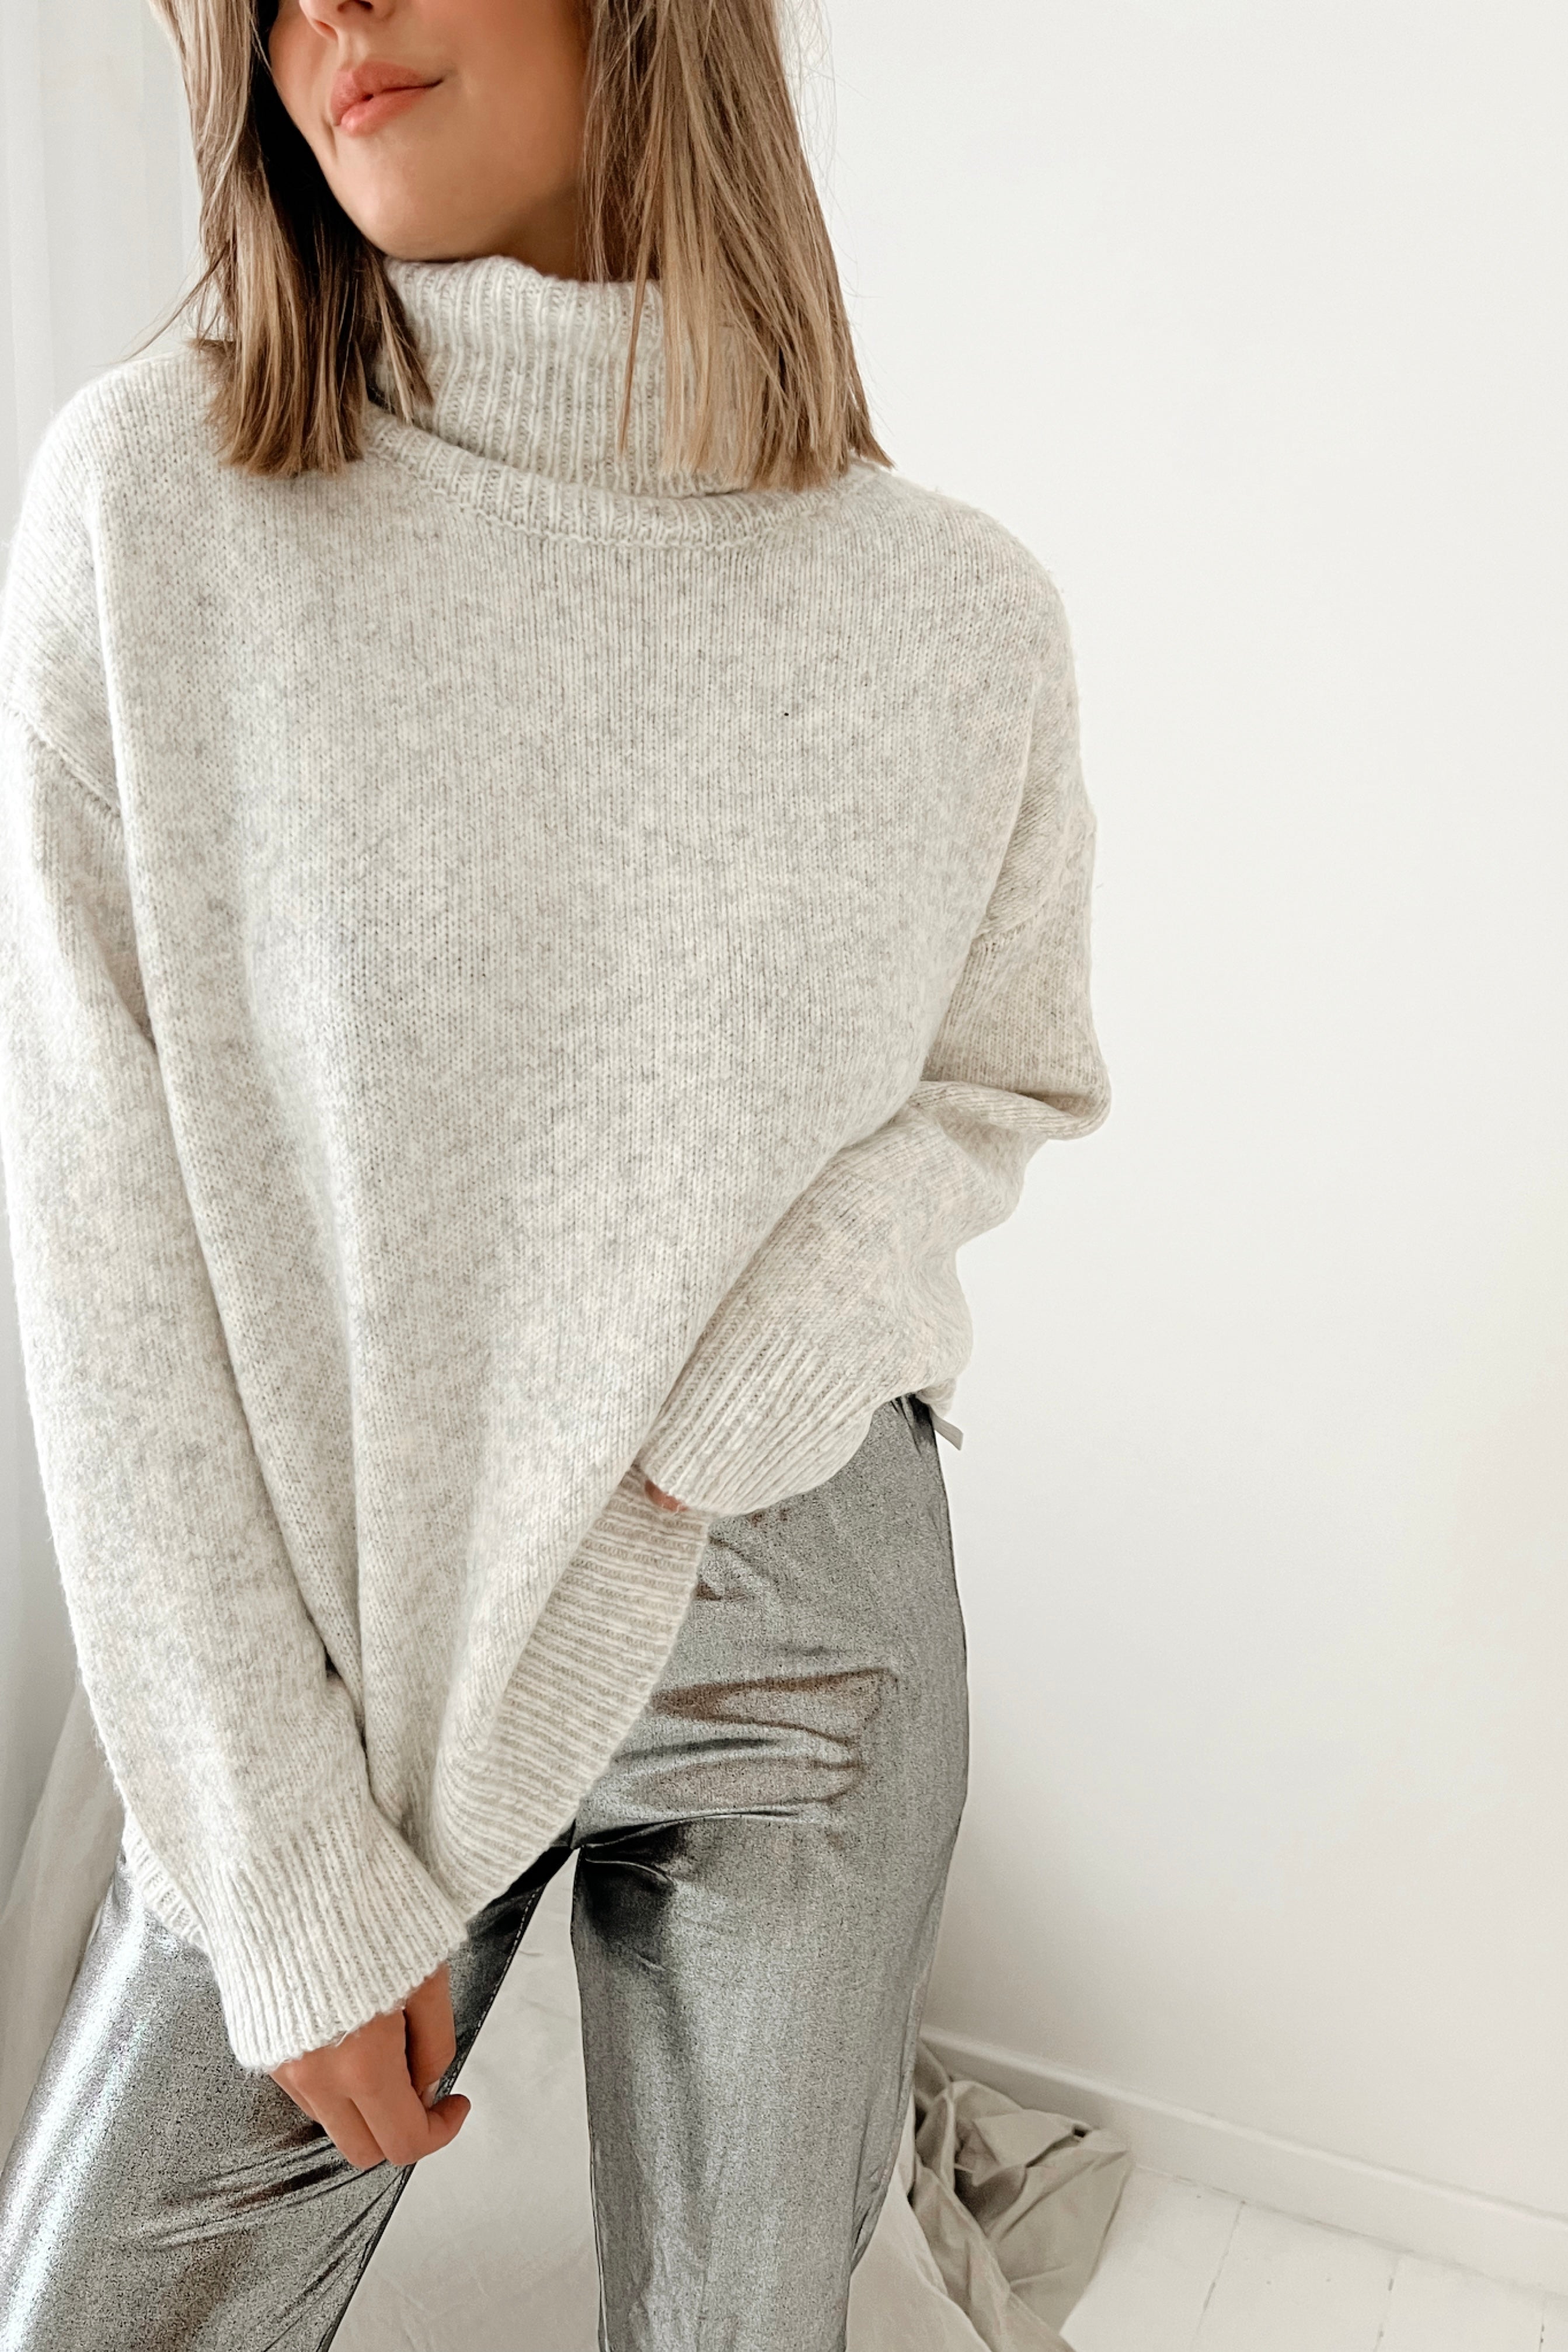 Emma-lou knit grey